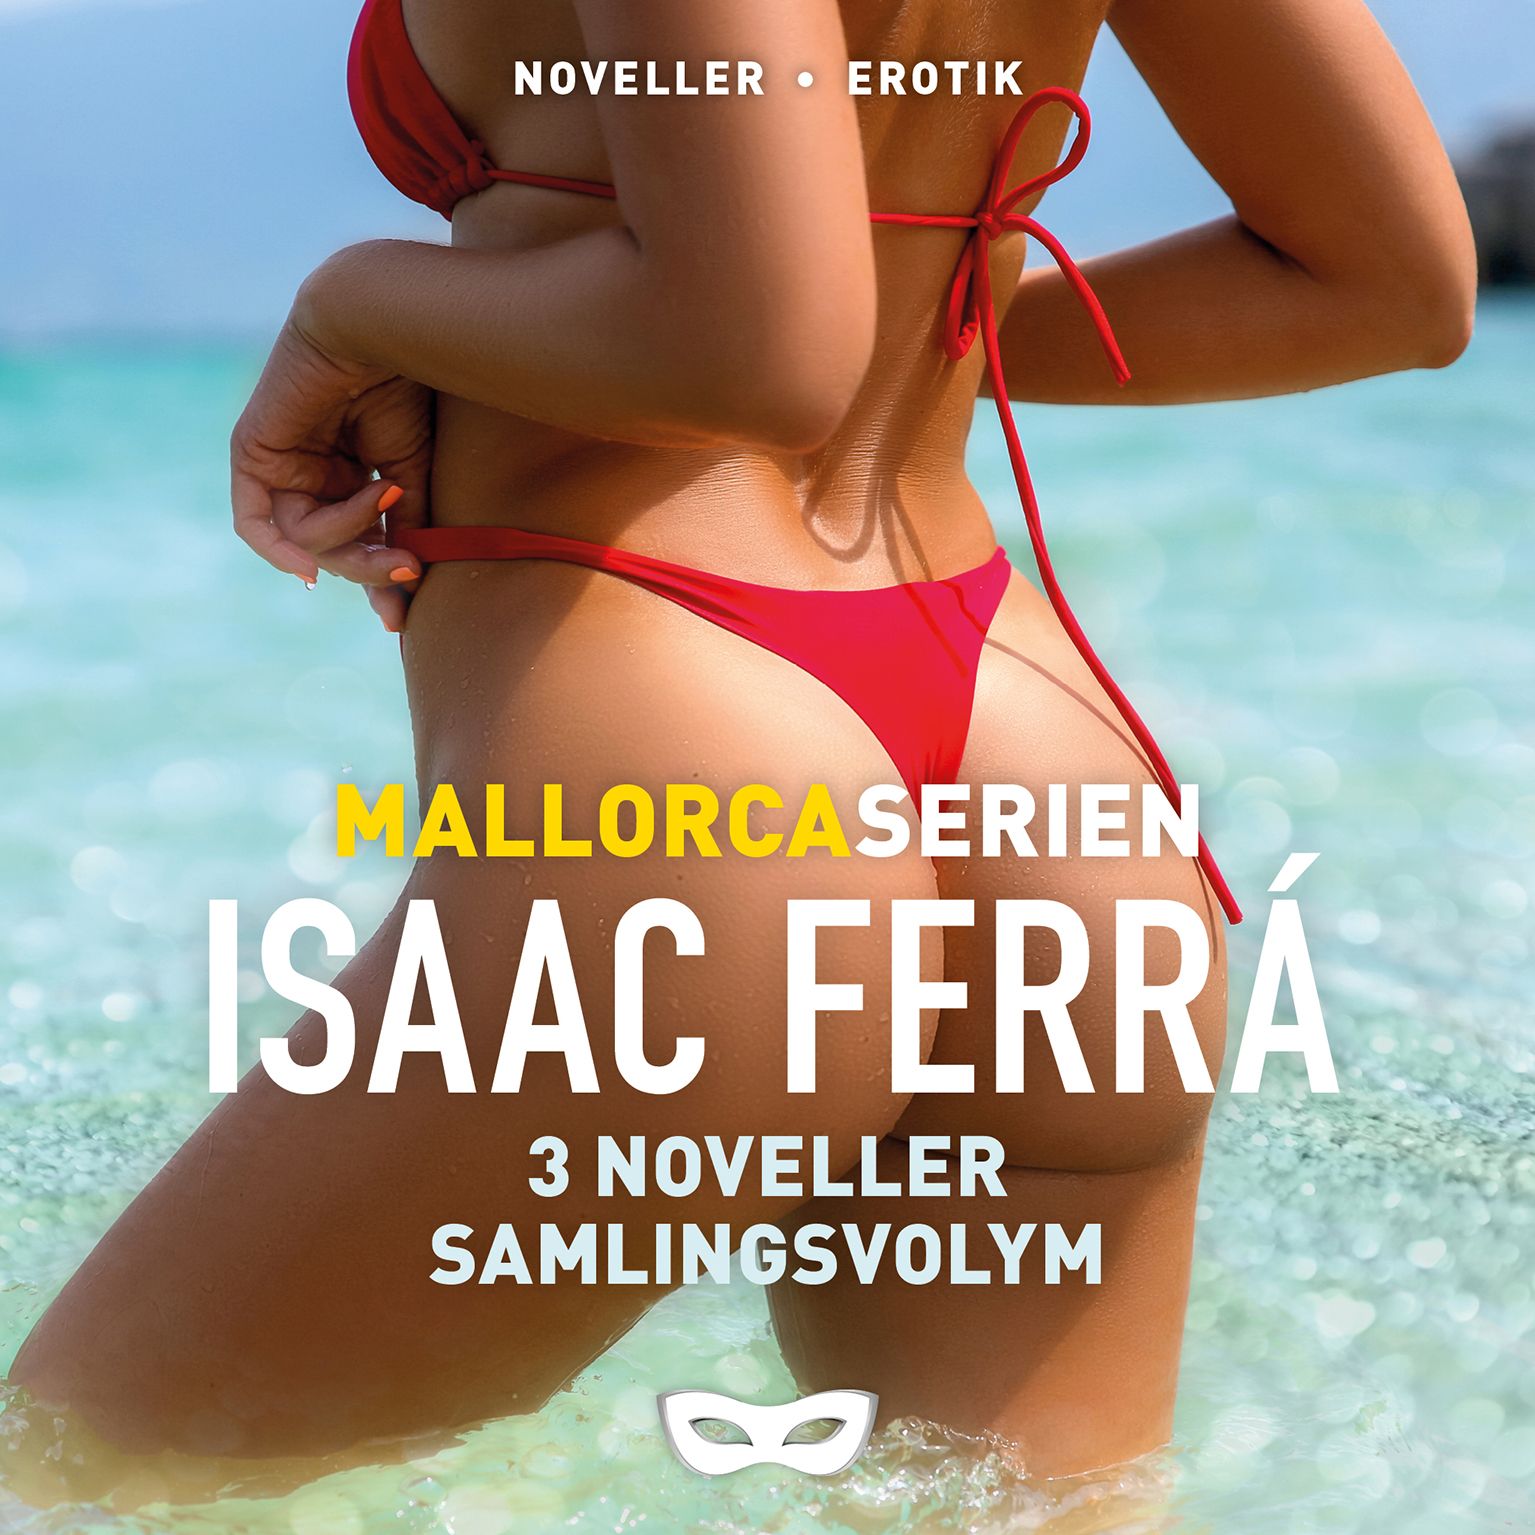 Mallorcaserien 3 noveller (samlingsvolym), audiobook by Isaac Ferrá